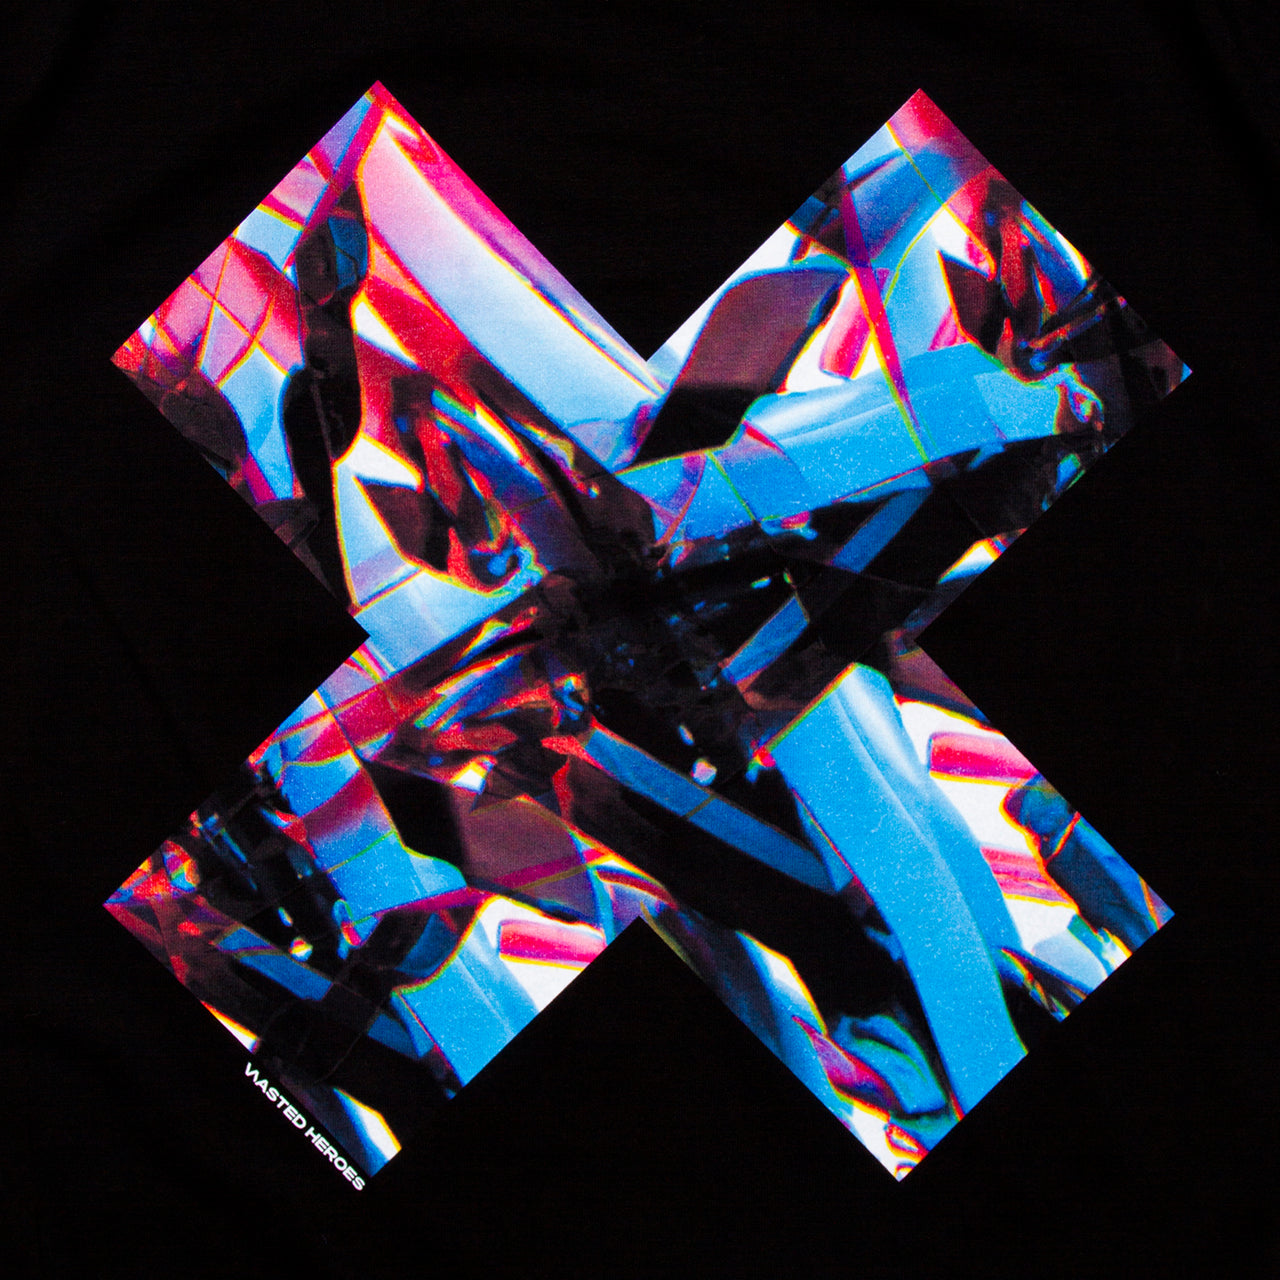 Reflect X Imprint - Tshirt - Black